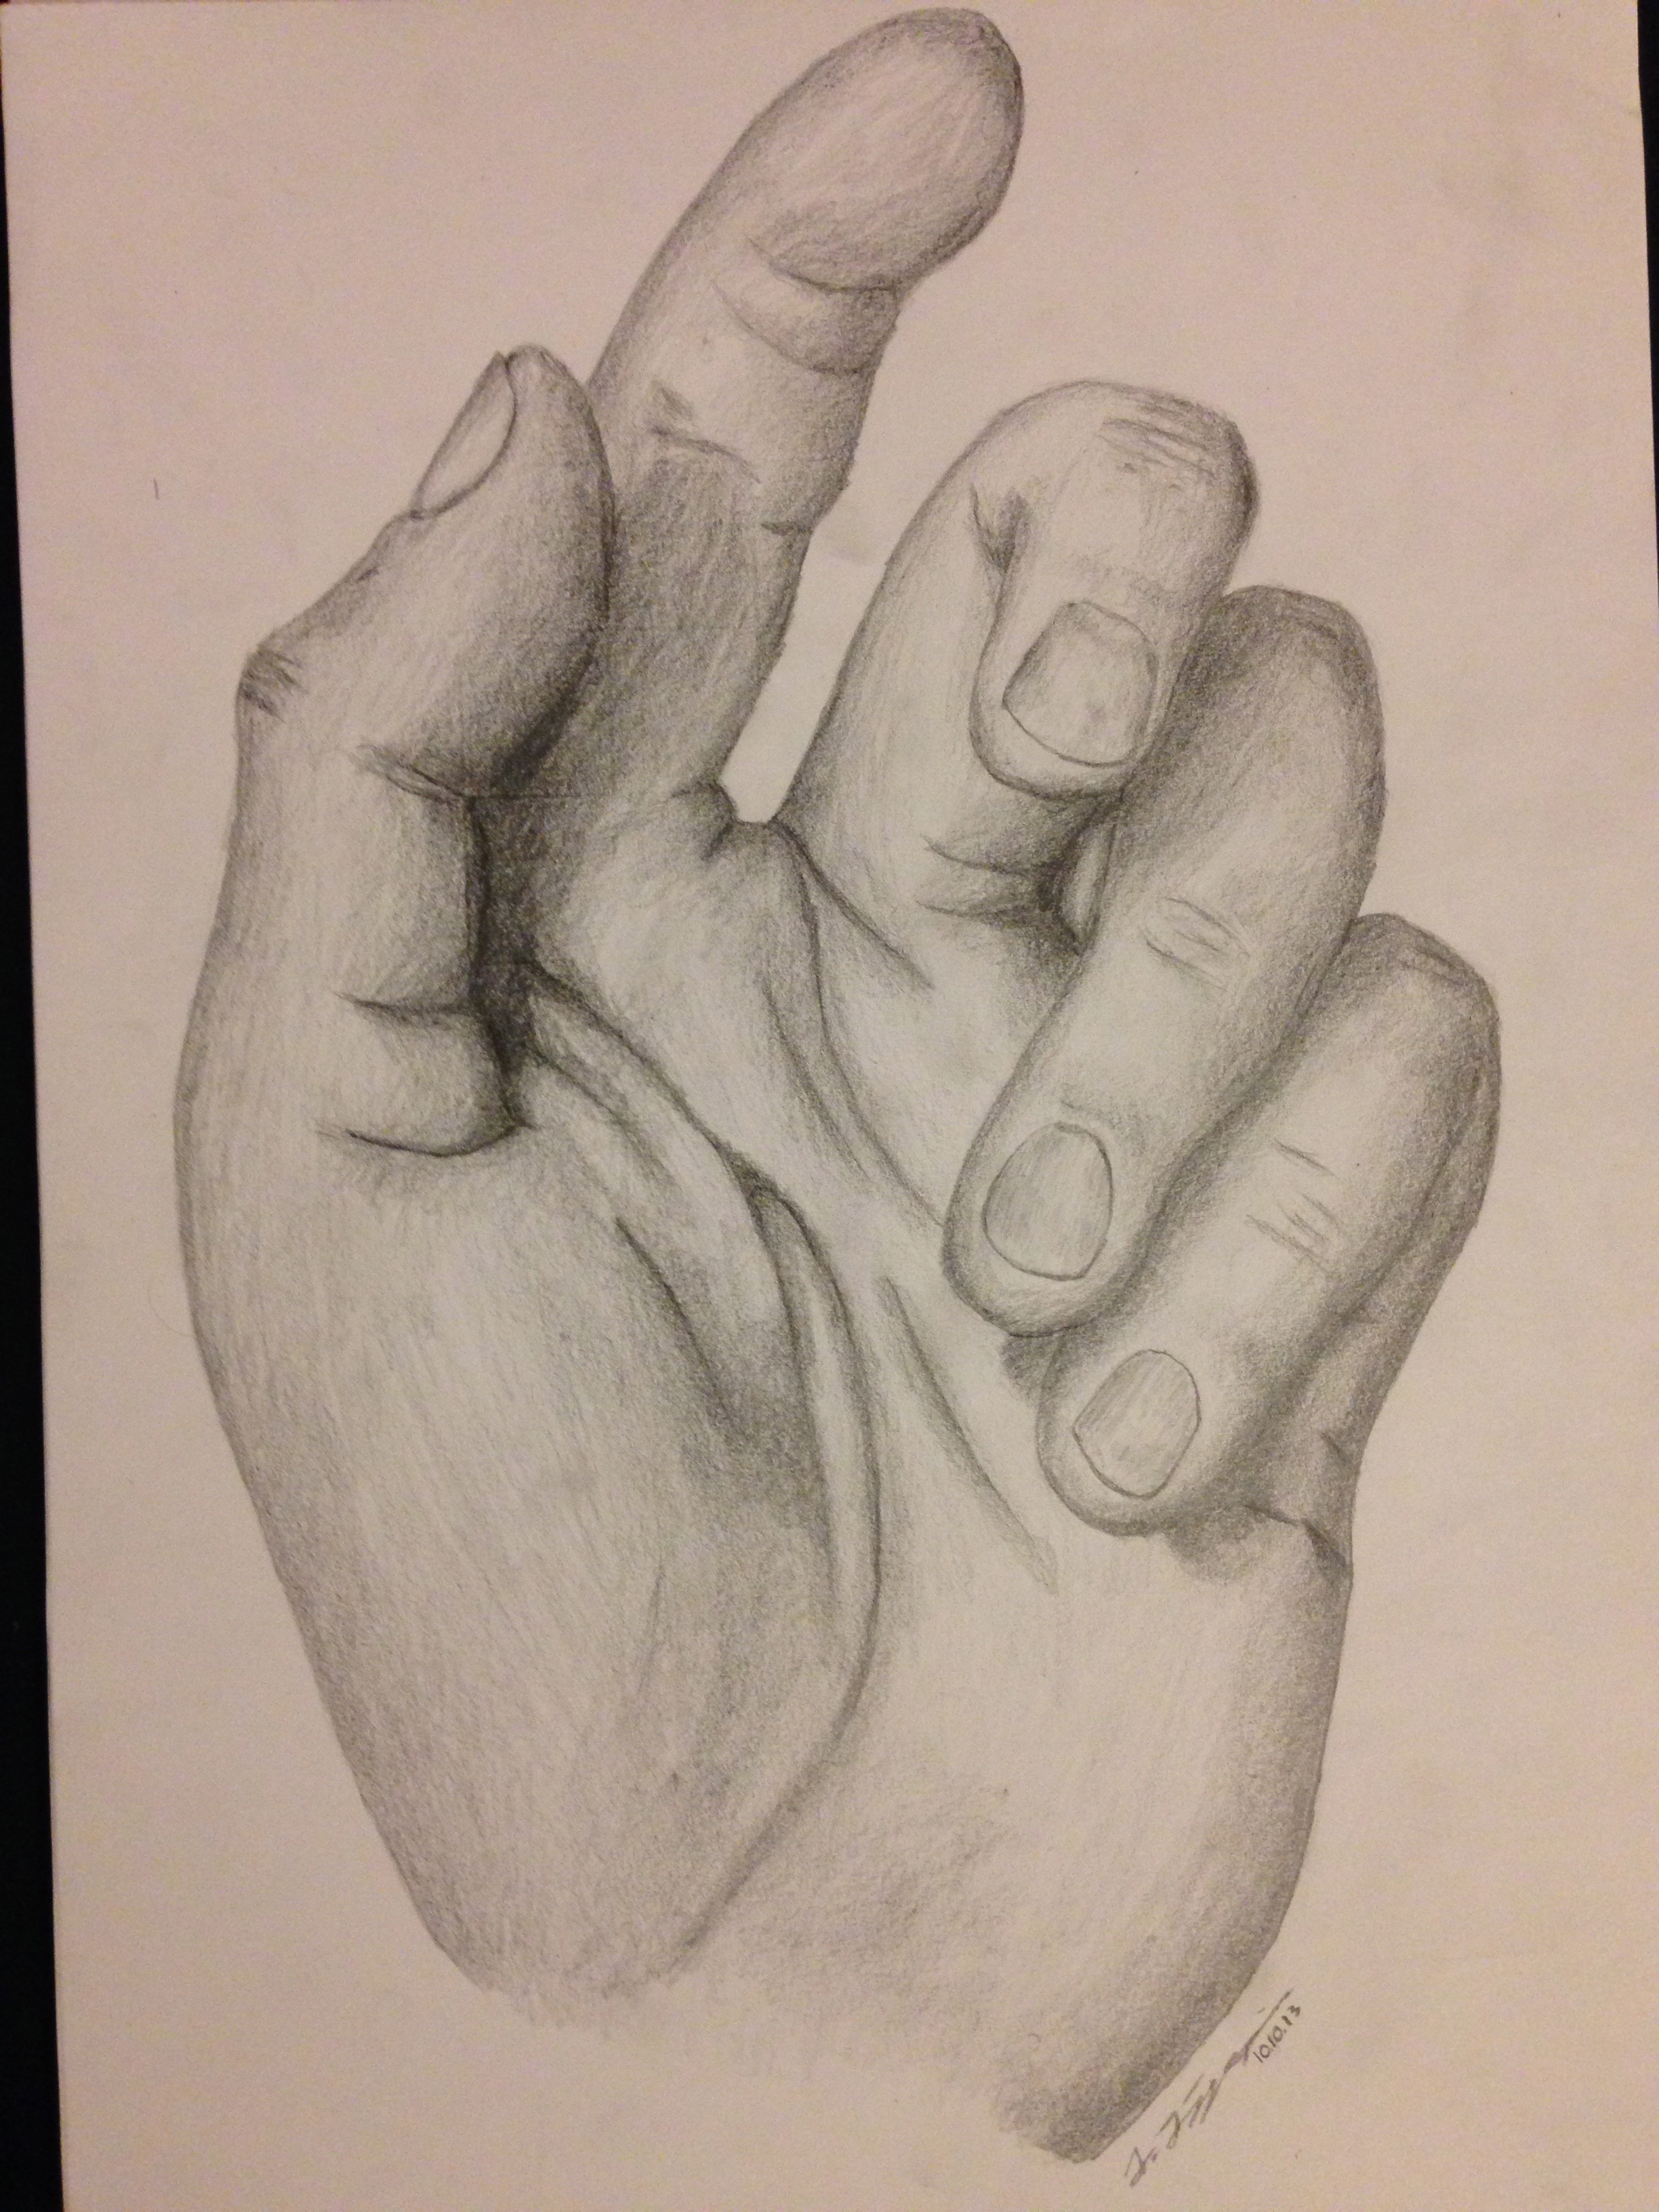 Human Hand Drawing Practice by JonasJaeger on DeviantArt